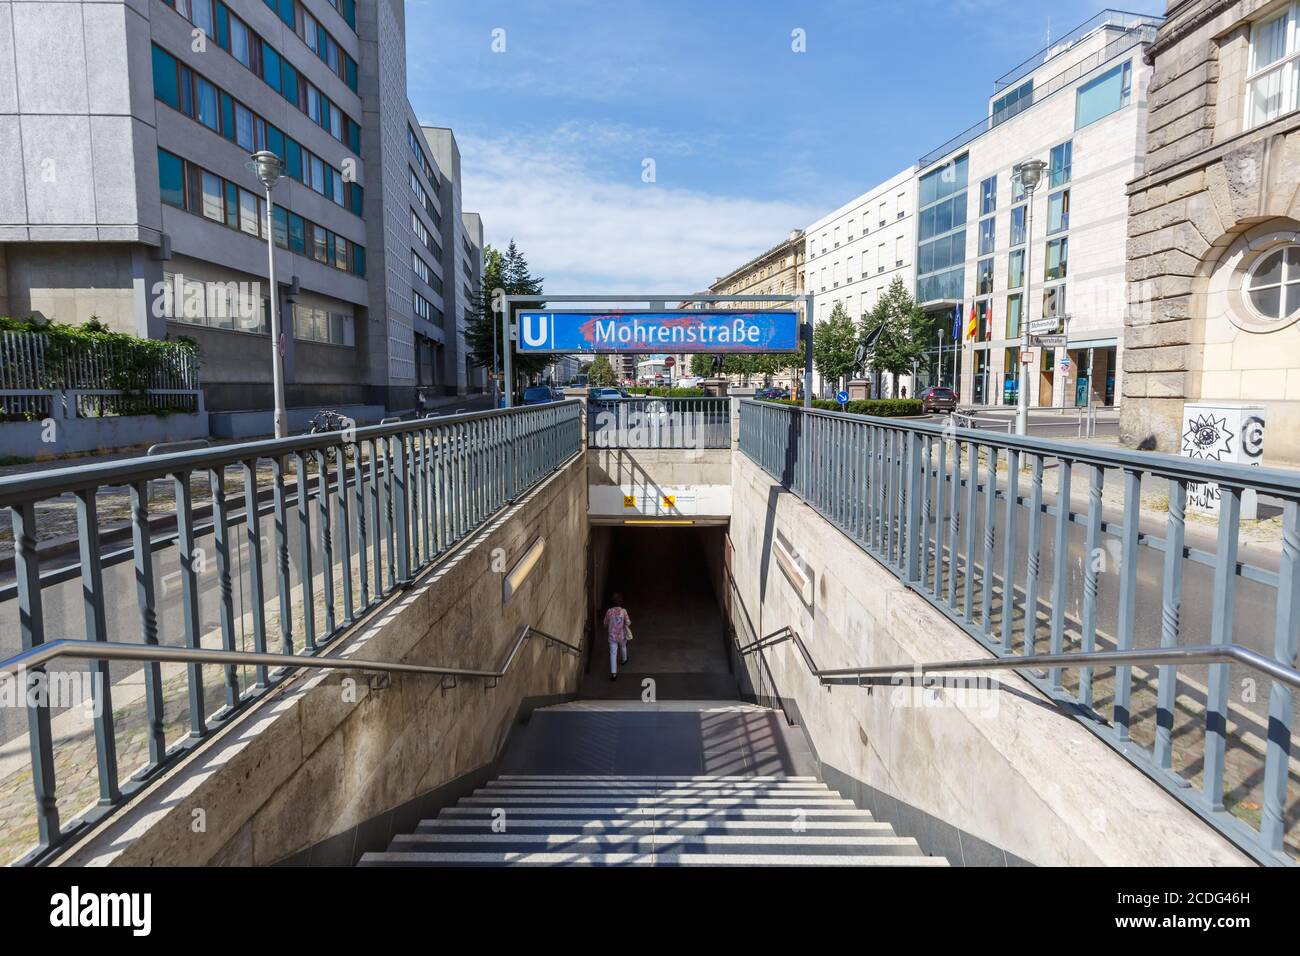 Berlino, Germania - 20 agosto 2020: Mohrenstraße Berlino stazione della metropolitana Mohrenstrasse U-Bahn in Germania. Foto Stock